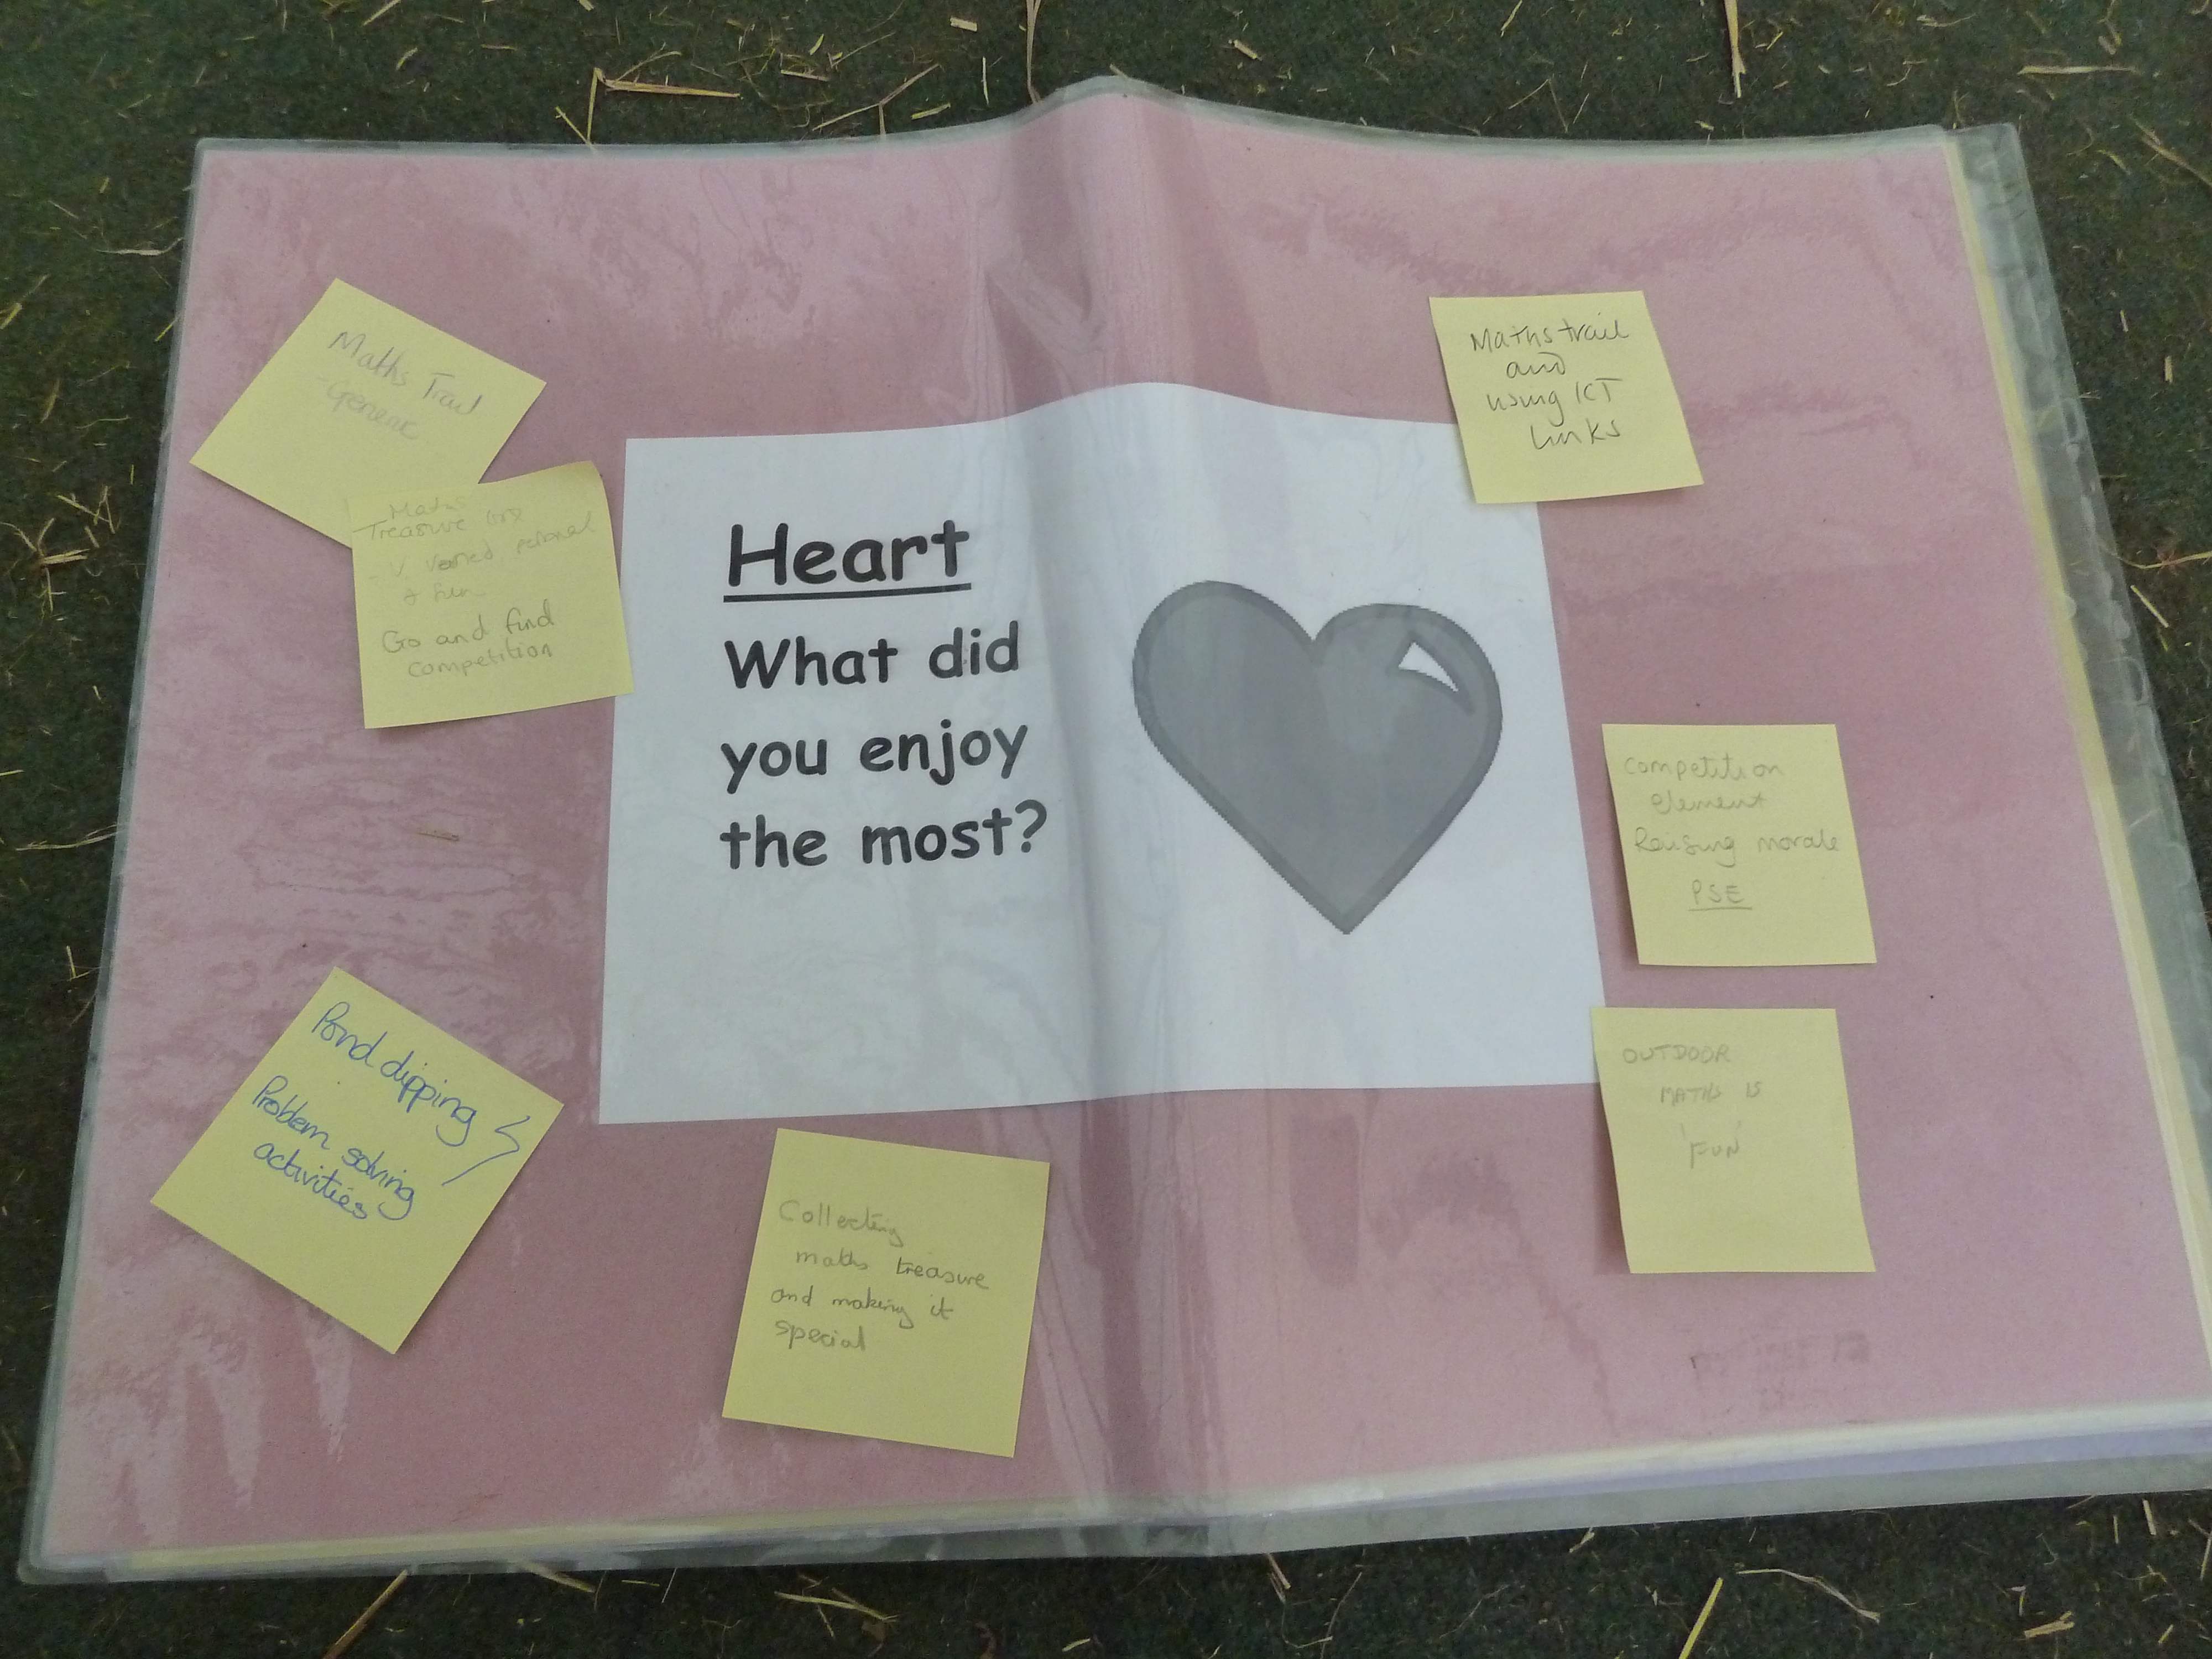 evaluation tools for back at school - head heart bin bag (maths)